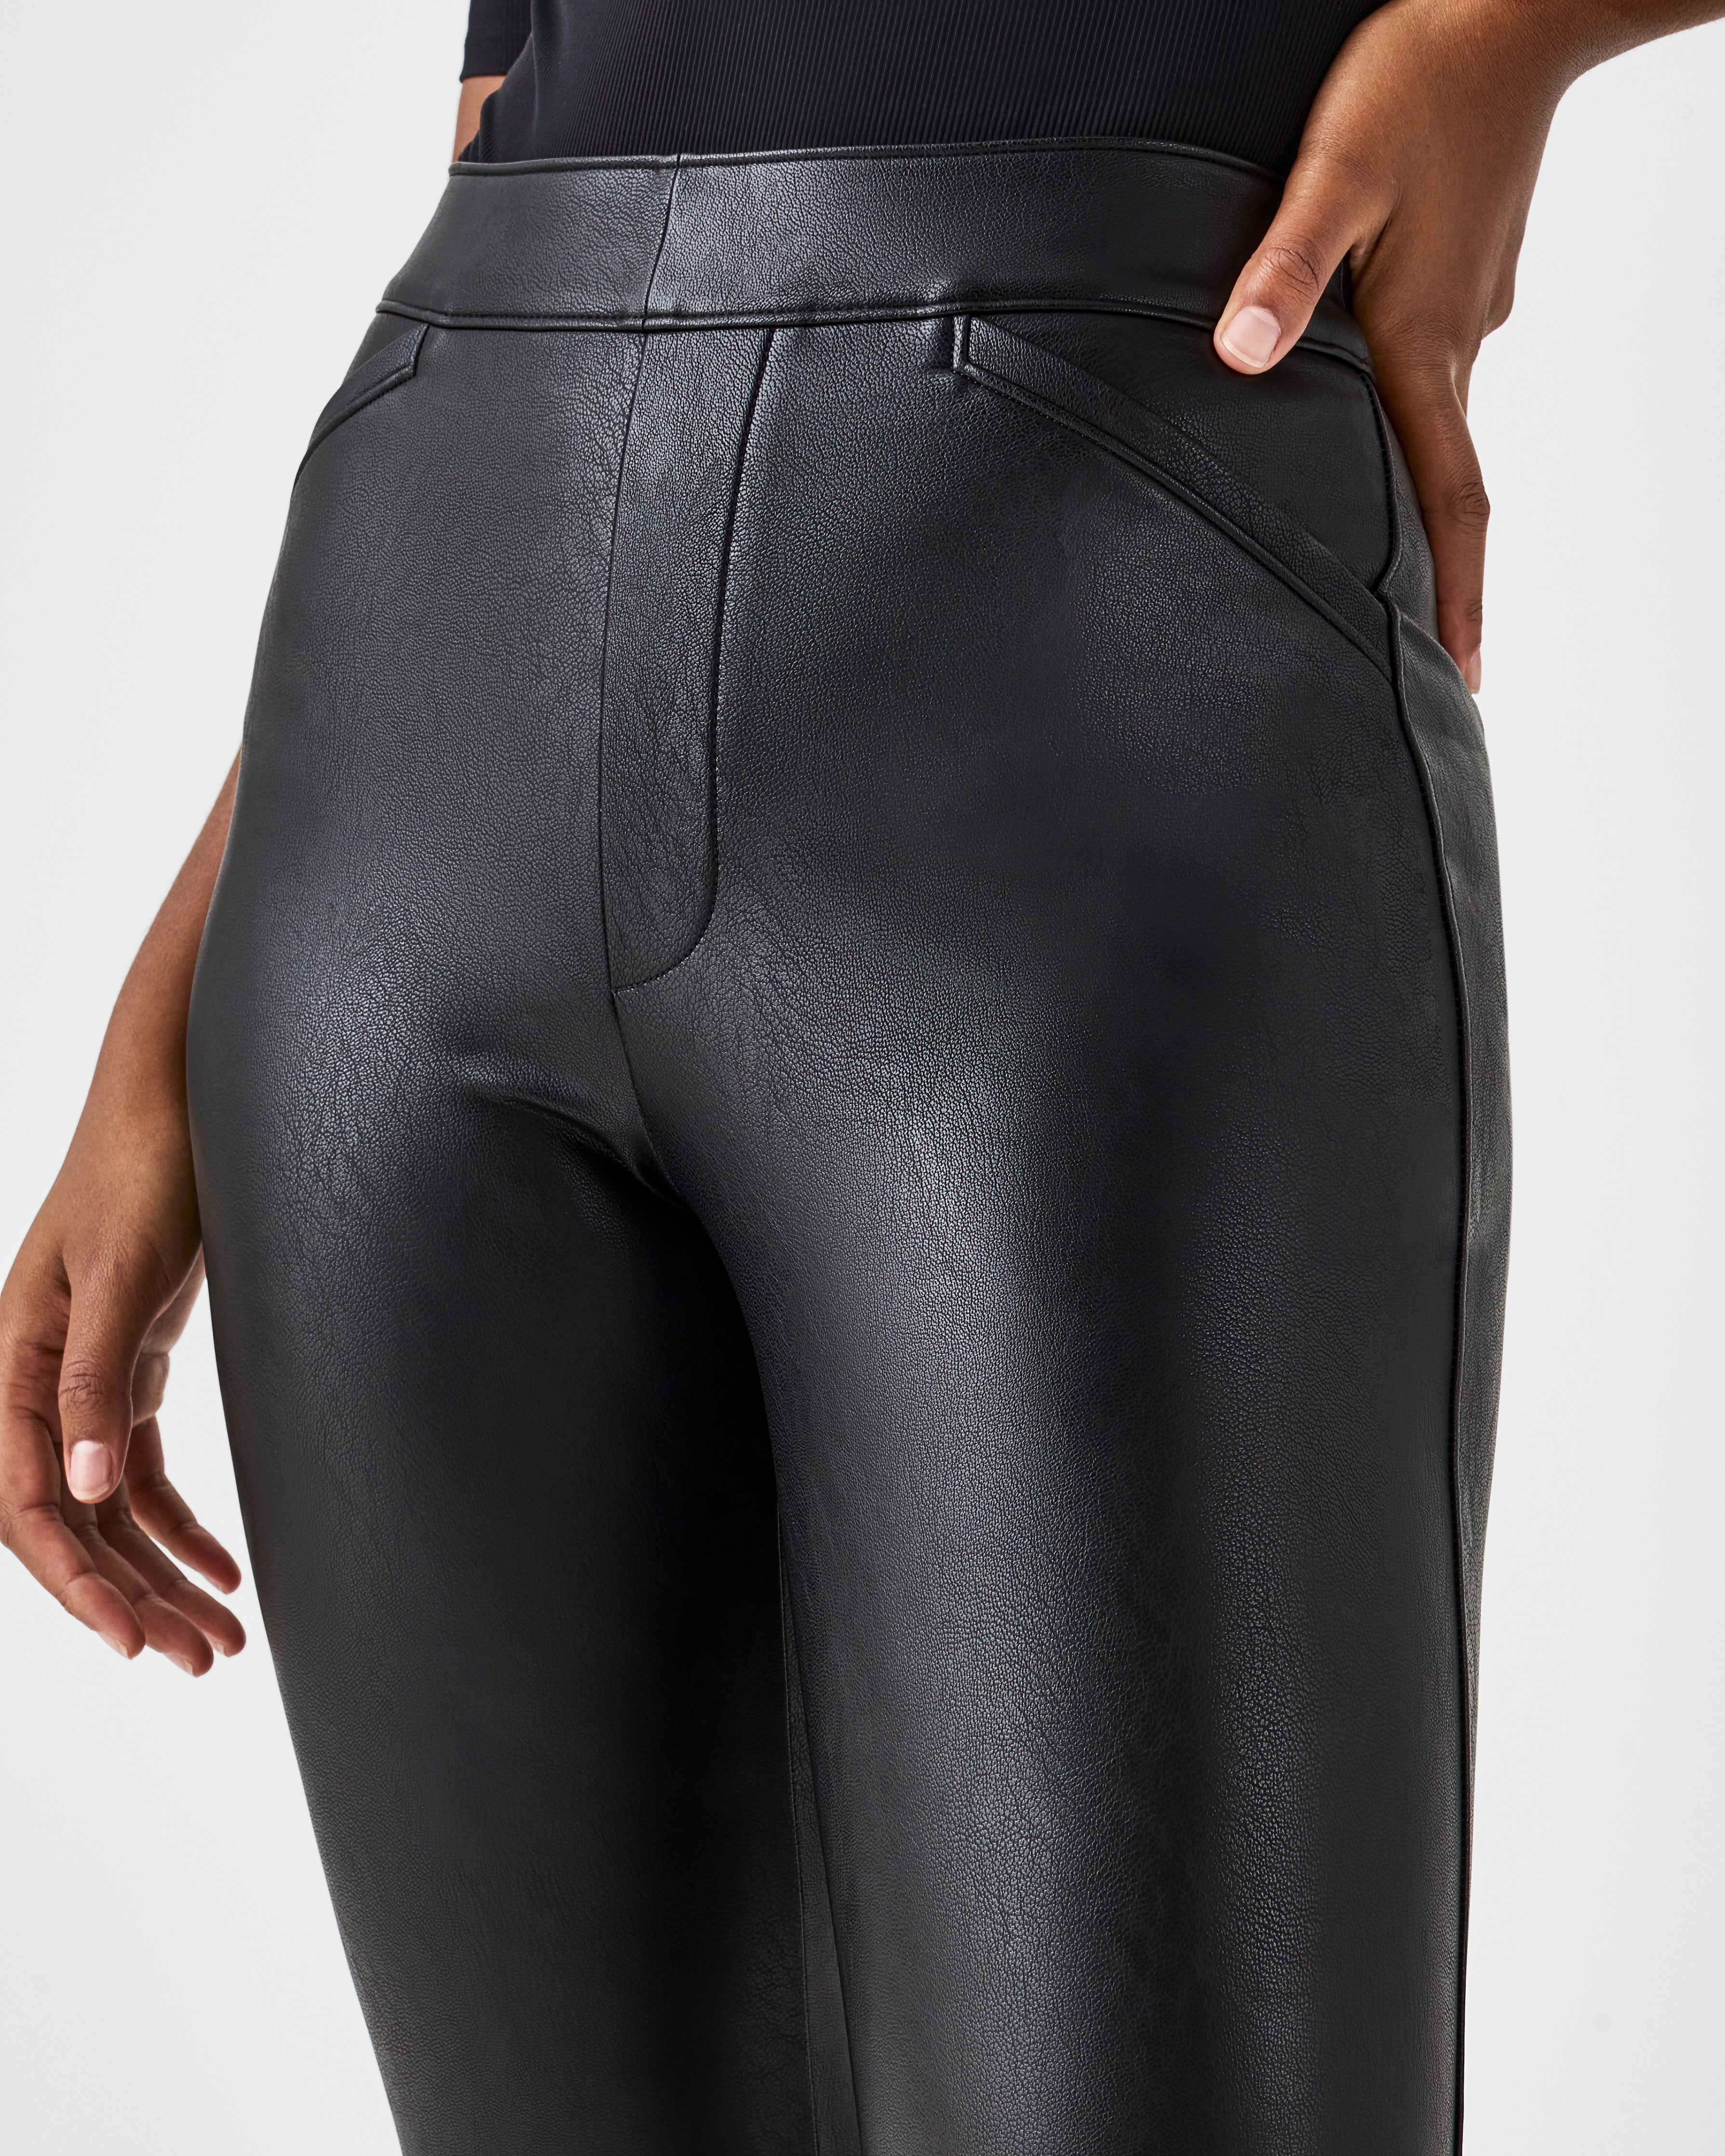 Buy SPANX Faux Leather Leggings for Women Tummy Control, Black, 2X